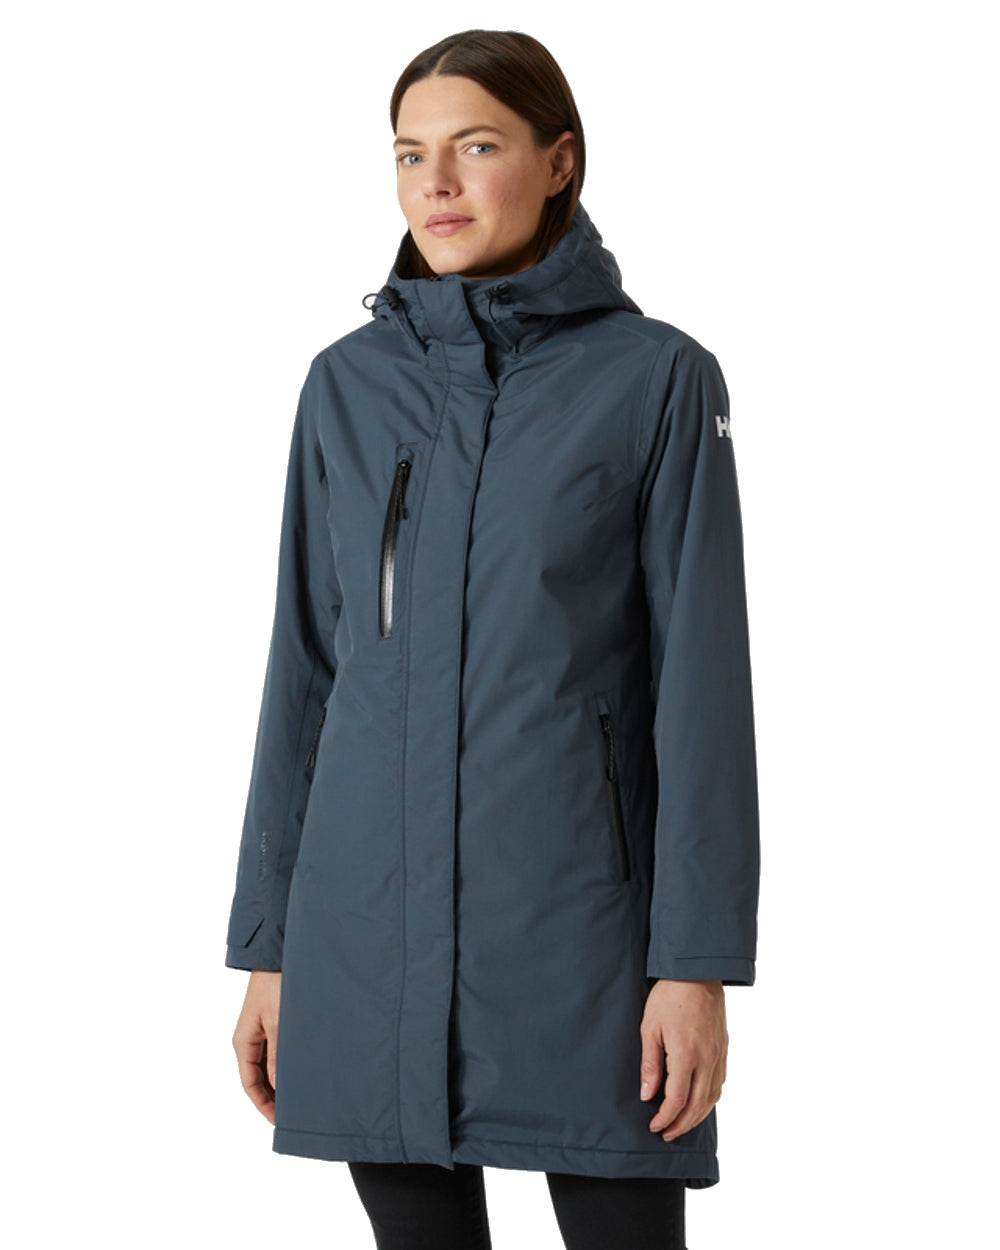 Helly Hansen Adore Ladies Insulated Rain Coat in Alpine Frost 